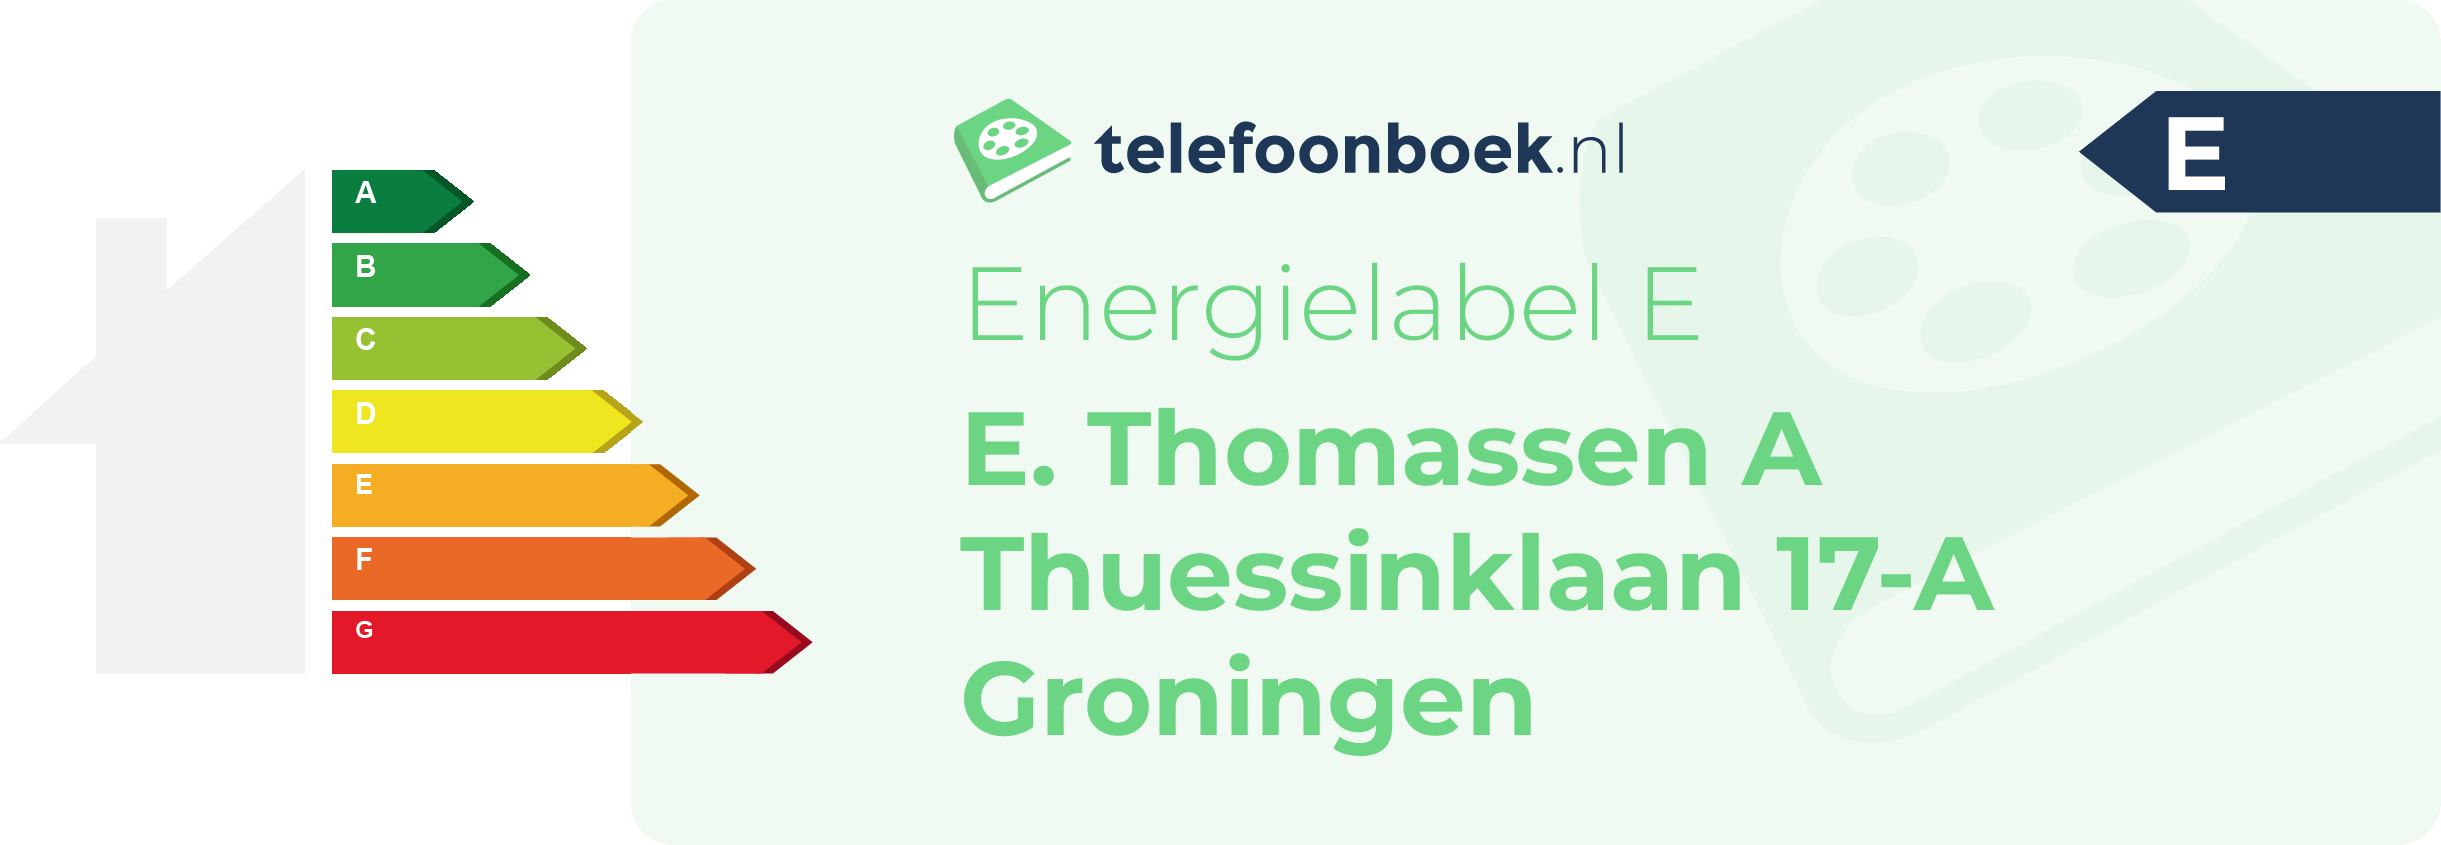 Energielabel E. Thomassen A Thuessinklaan 17-A Groningen